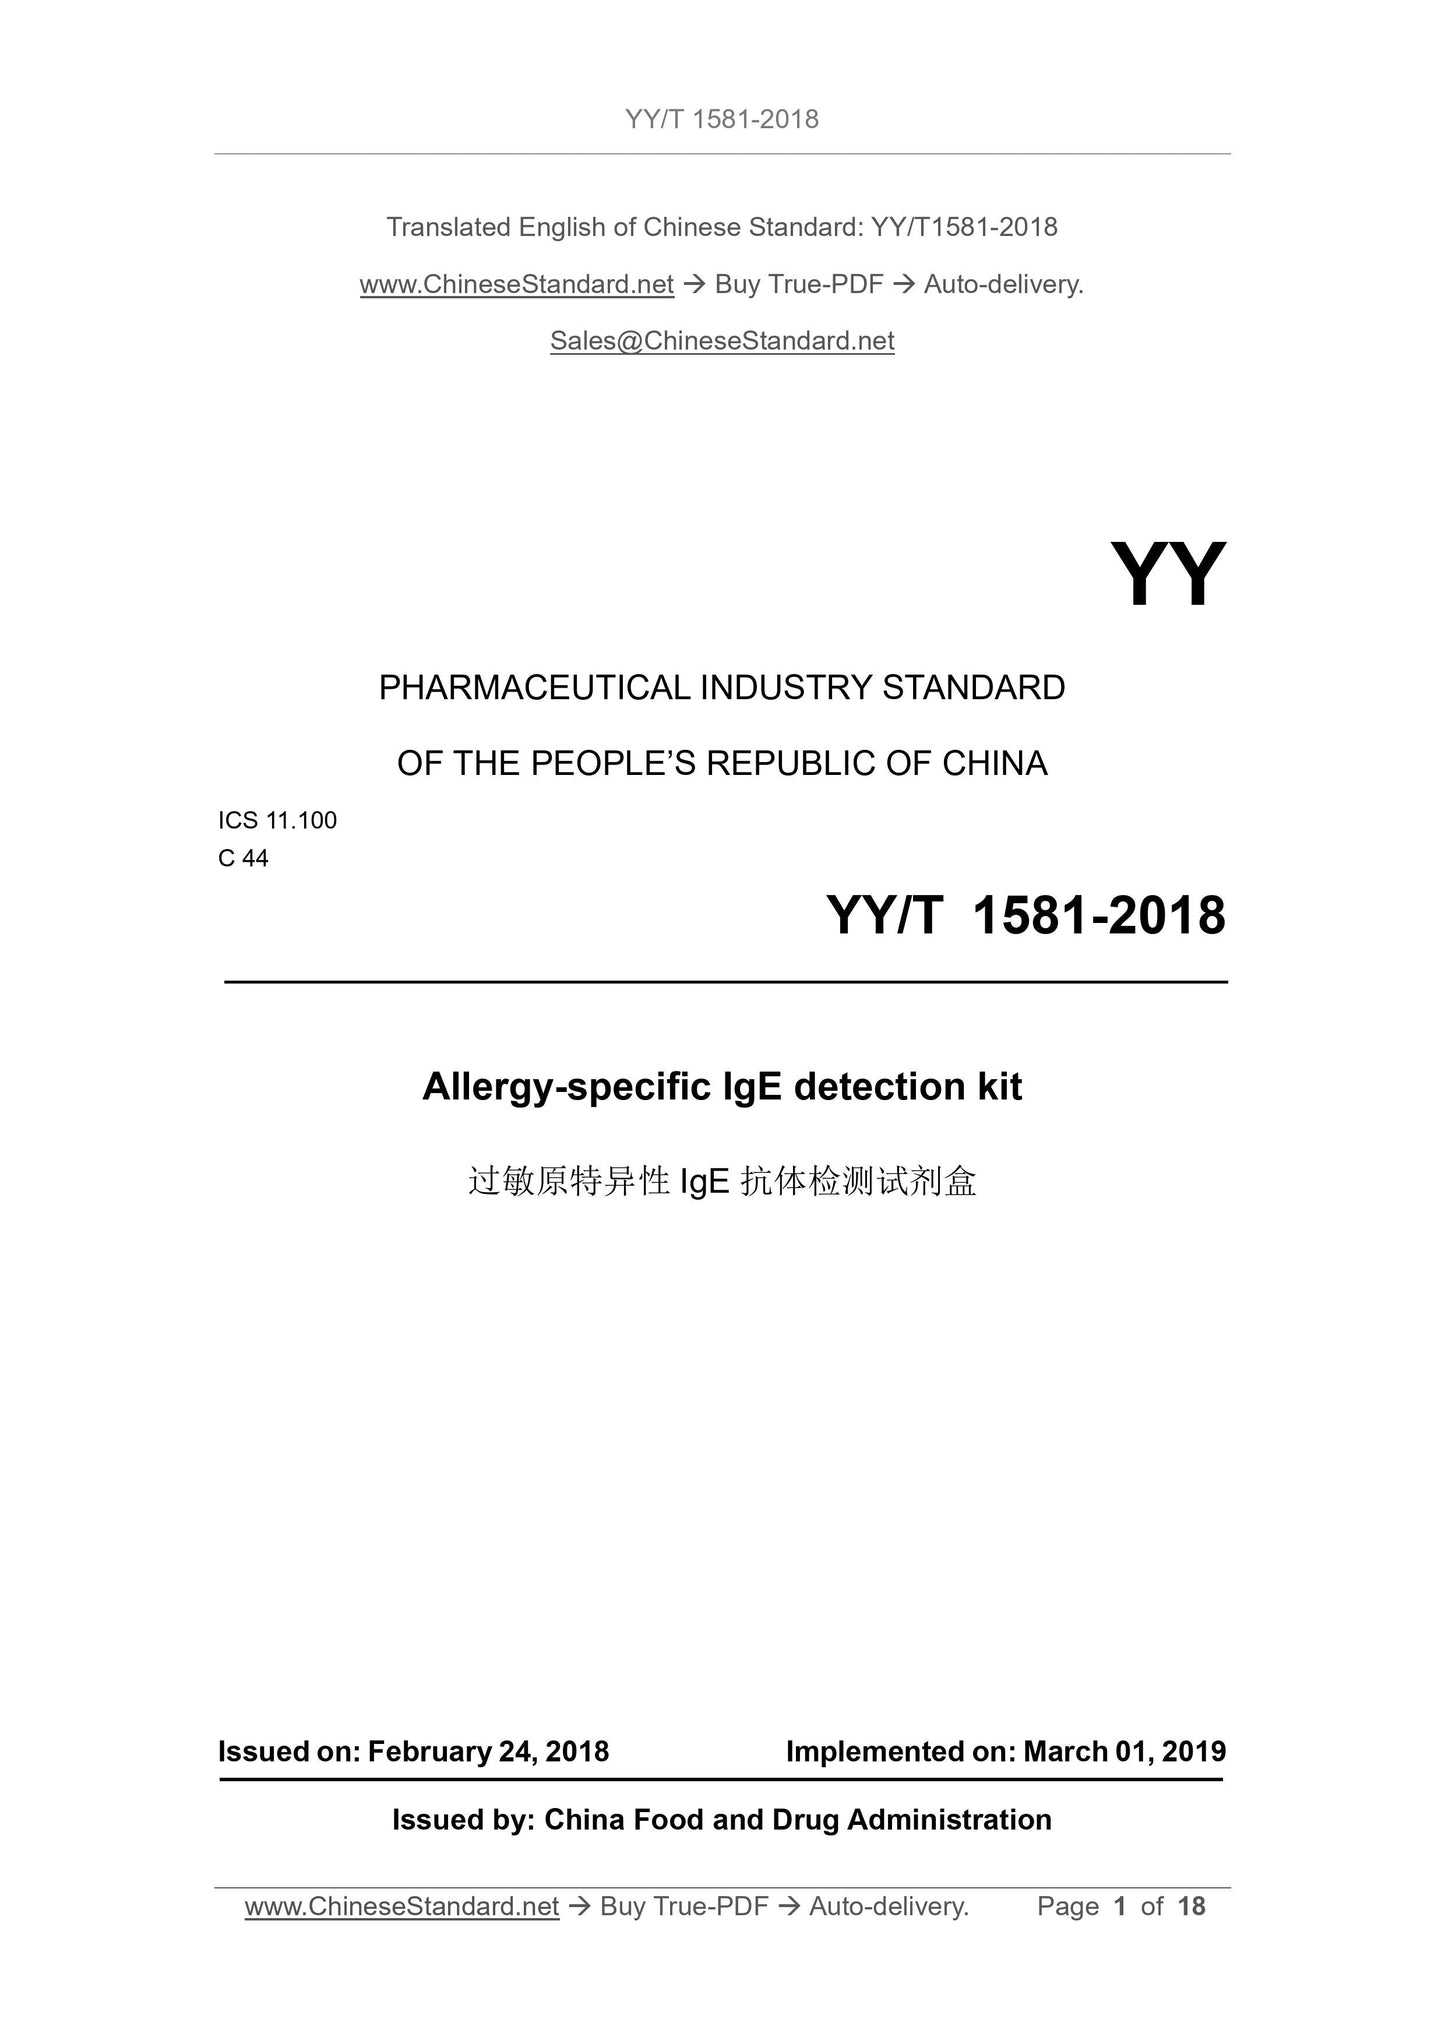 YY/T 1581-2018 Page 1